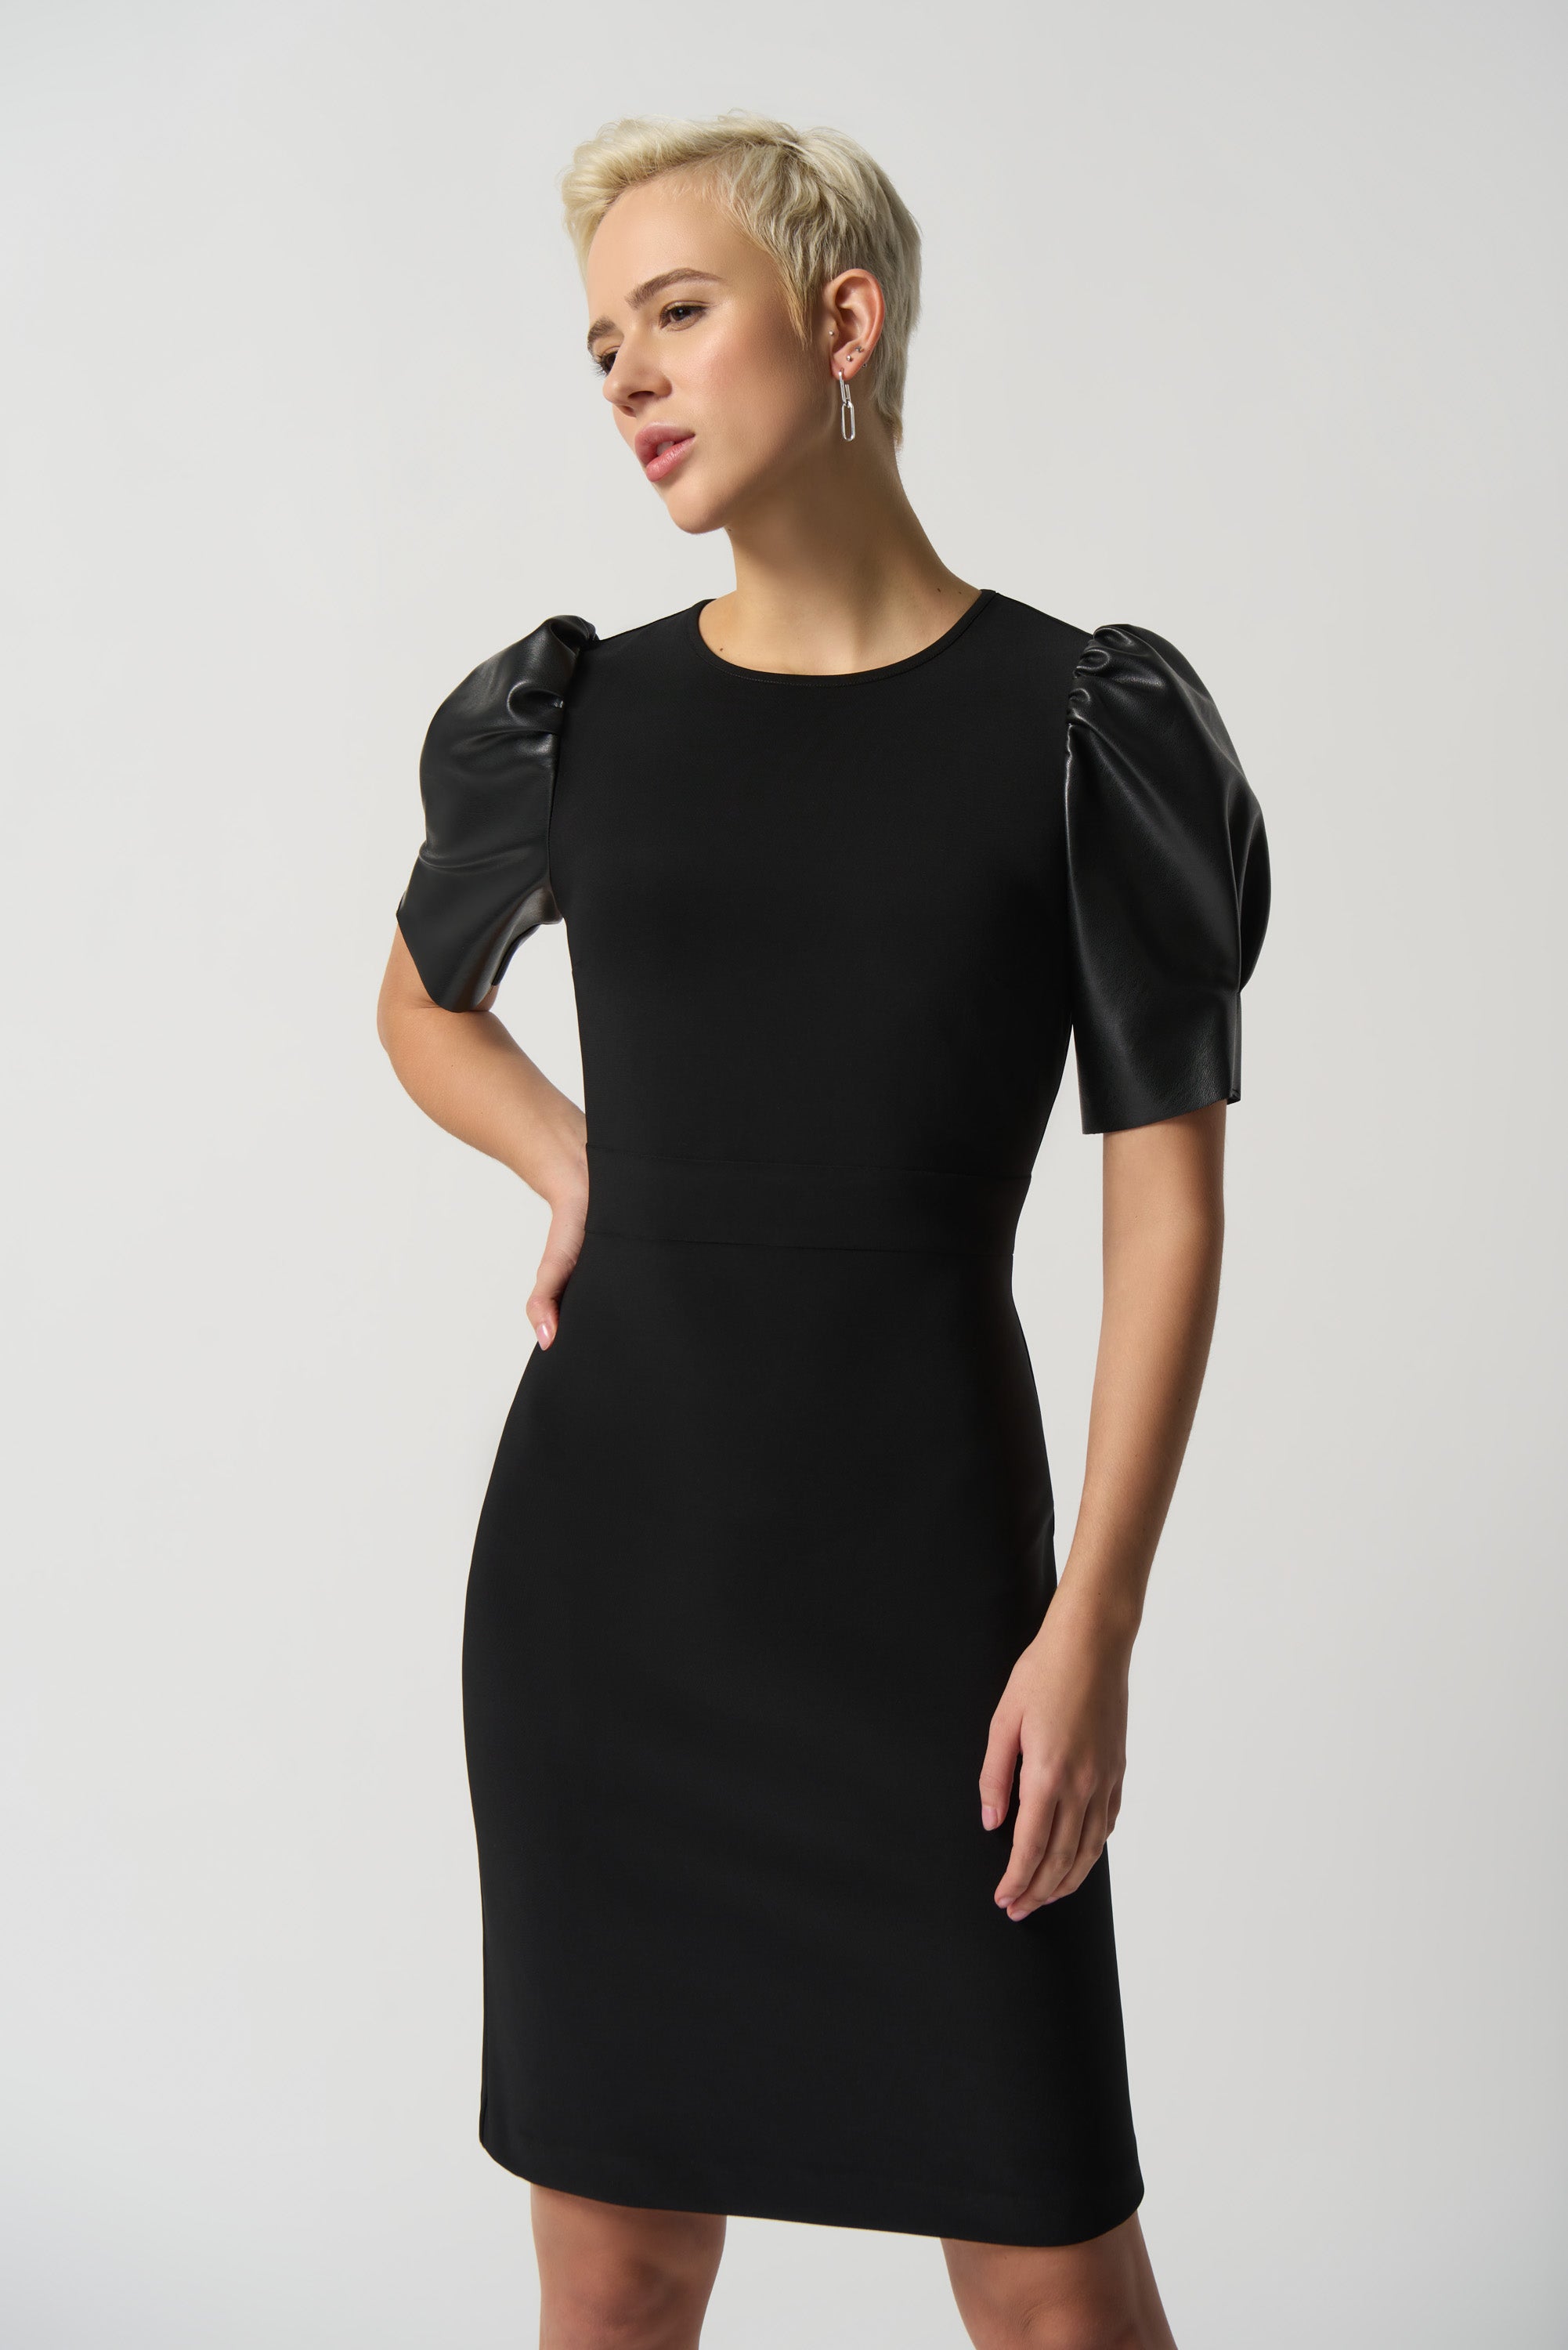 Puff-sleeve black sheath dress